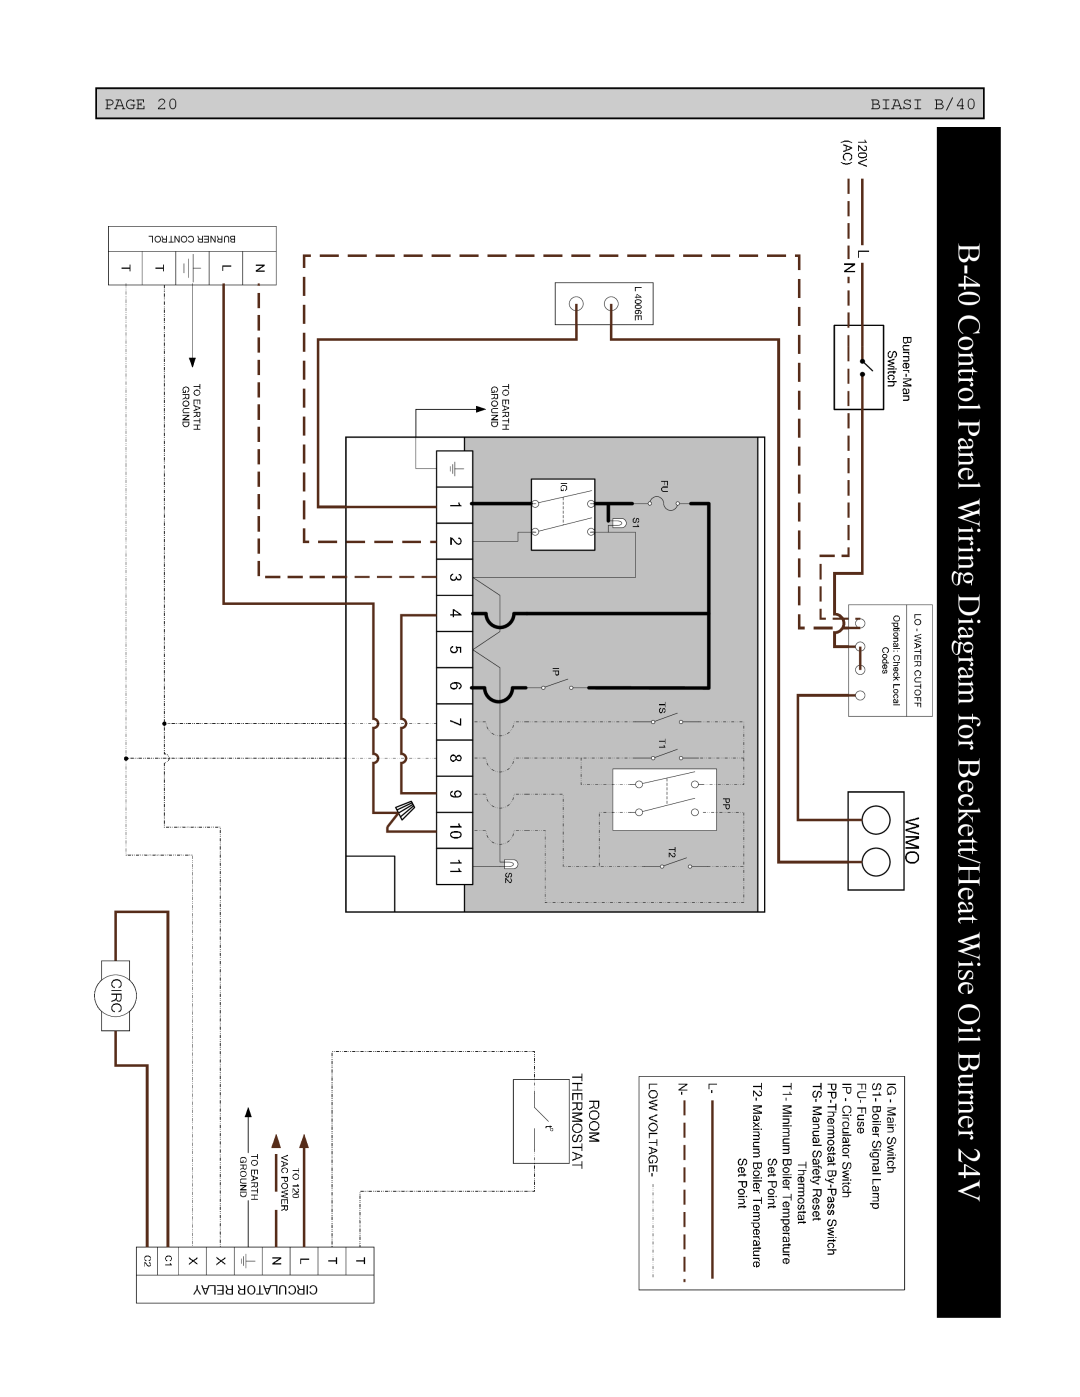 Linear Boiler B-40 Control Panel Wiring Diagram for Beckett/Heat Wise Oil Burner, Page, BIASI B/40, Relay Circulator 